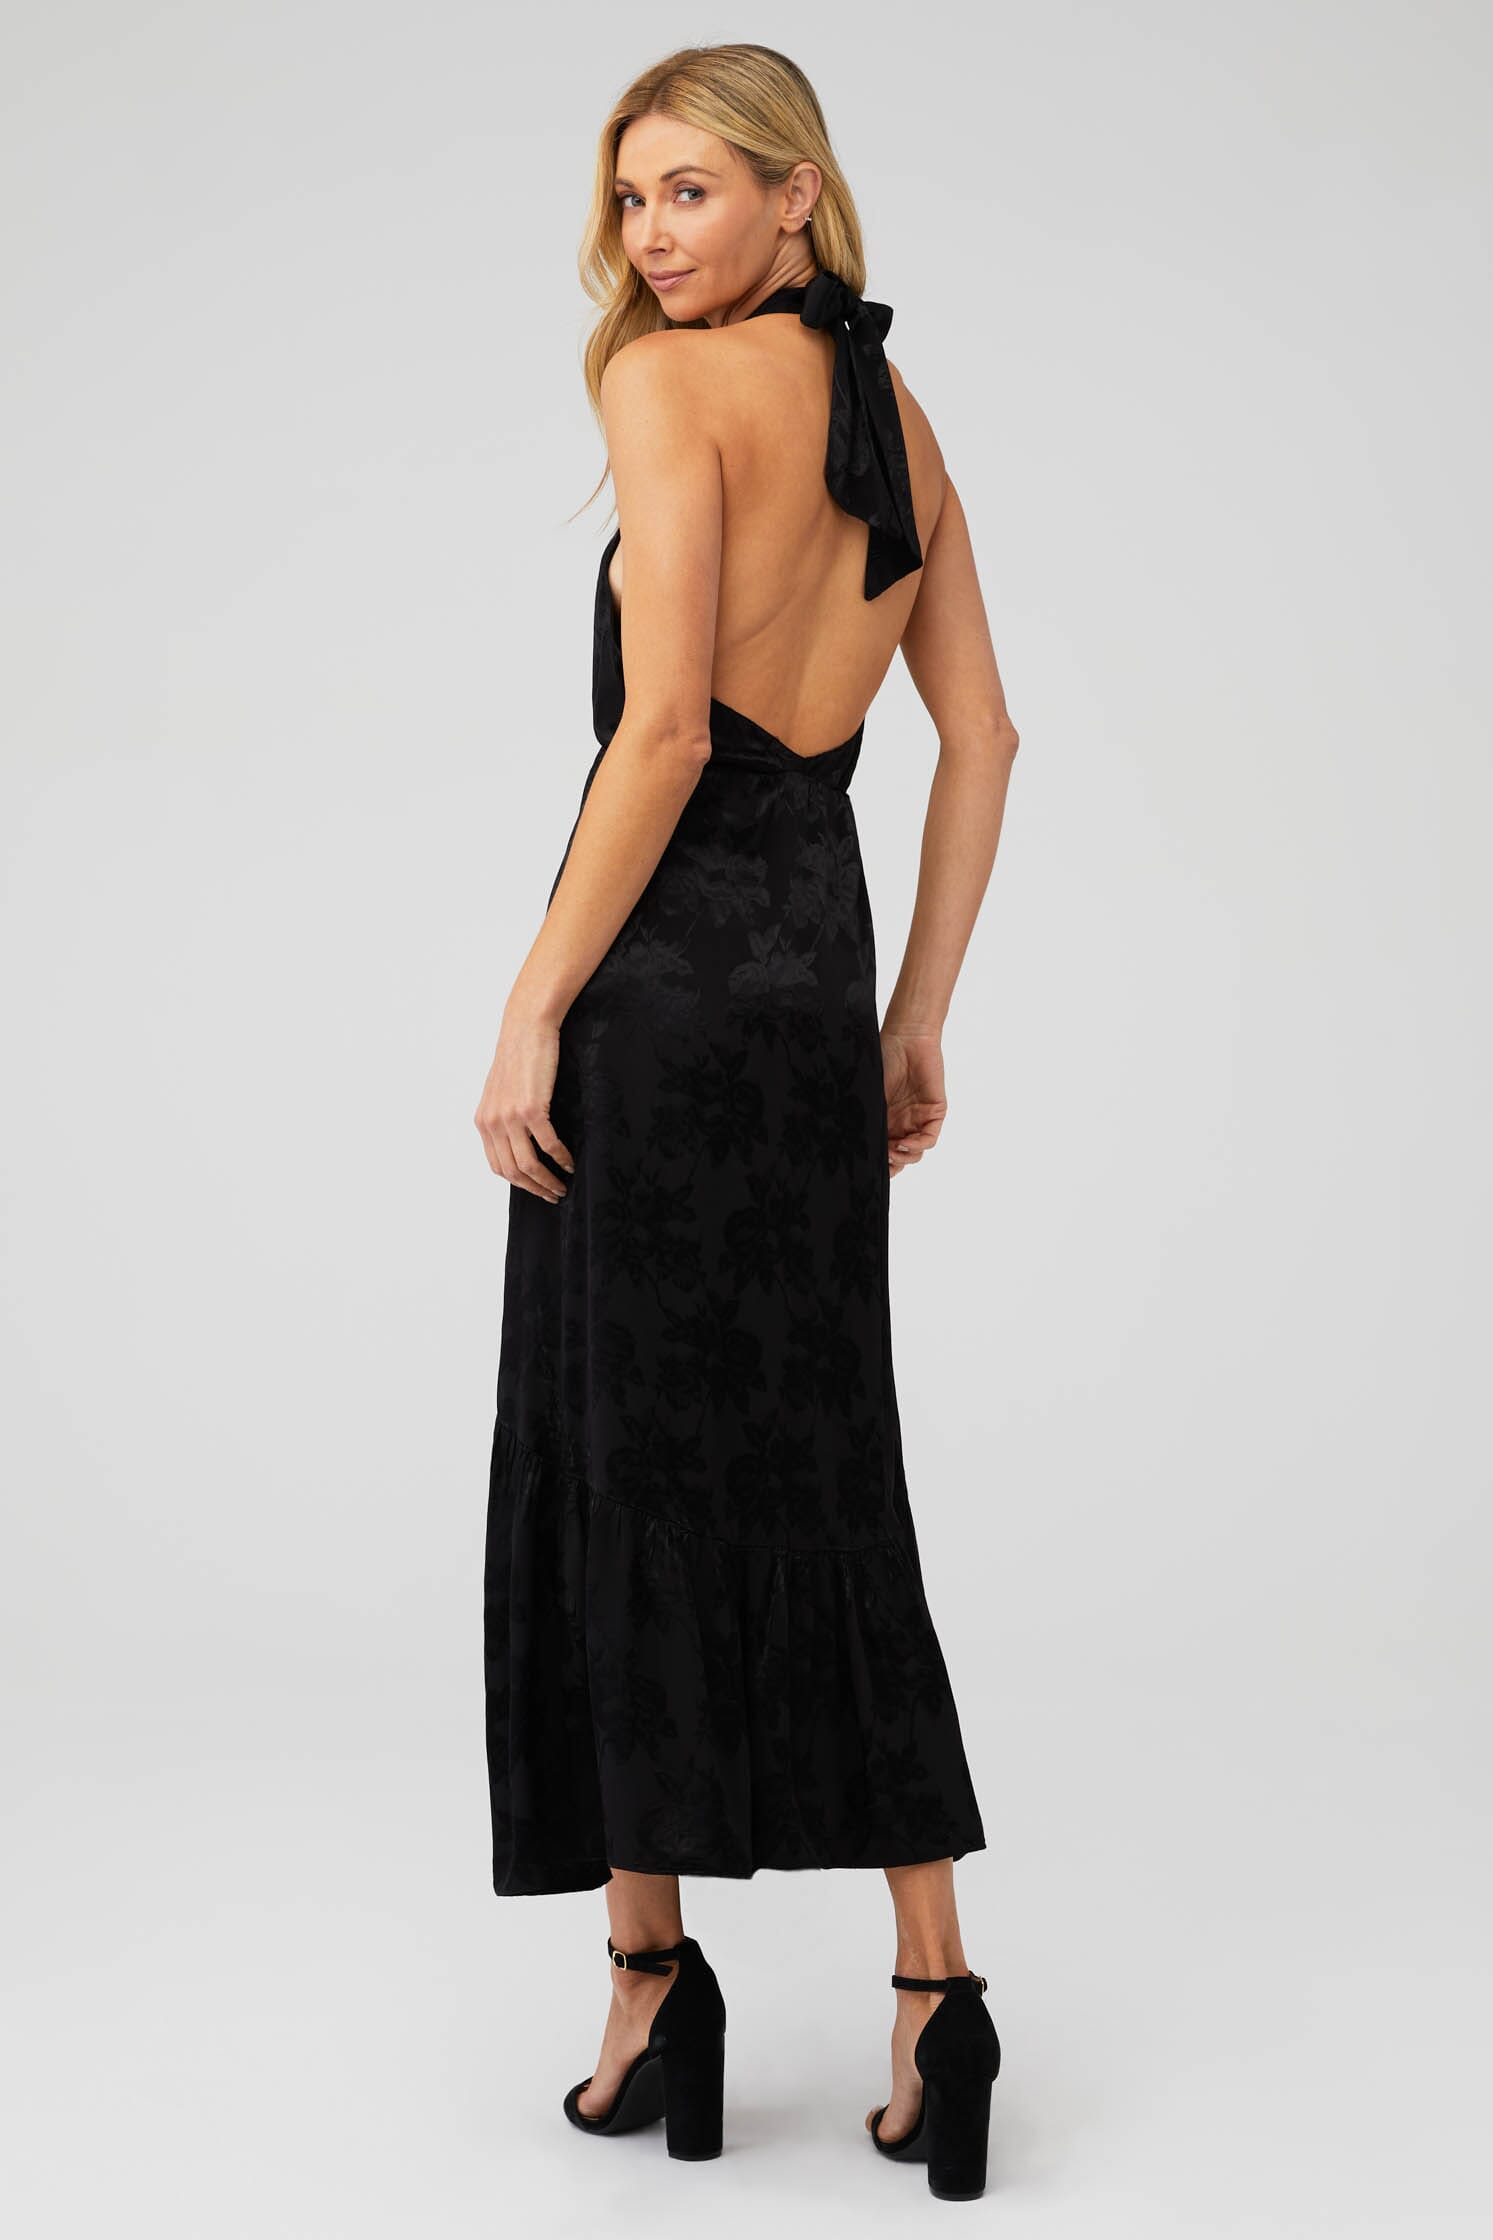 Saylor | Audie Dress in Black | FashionPass